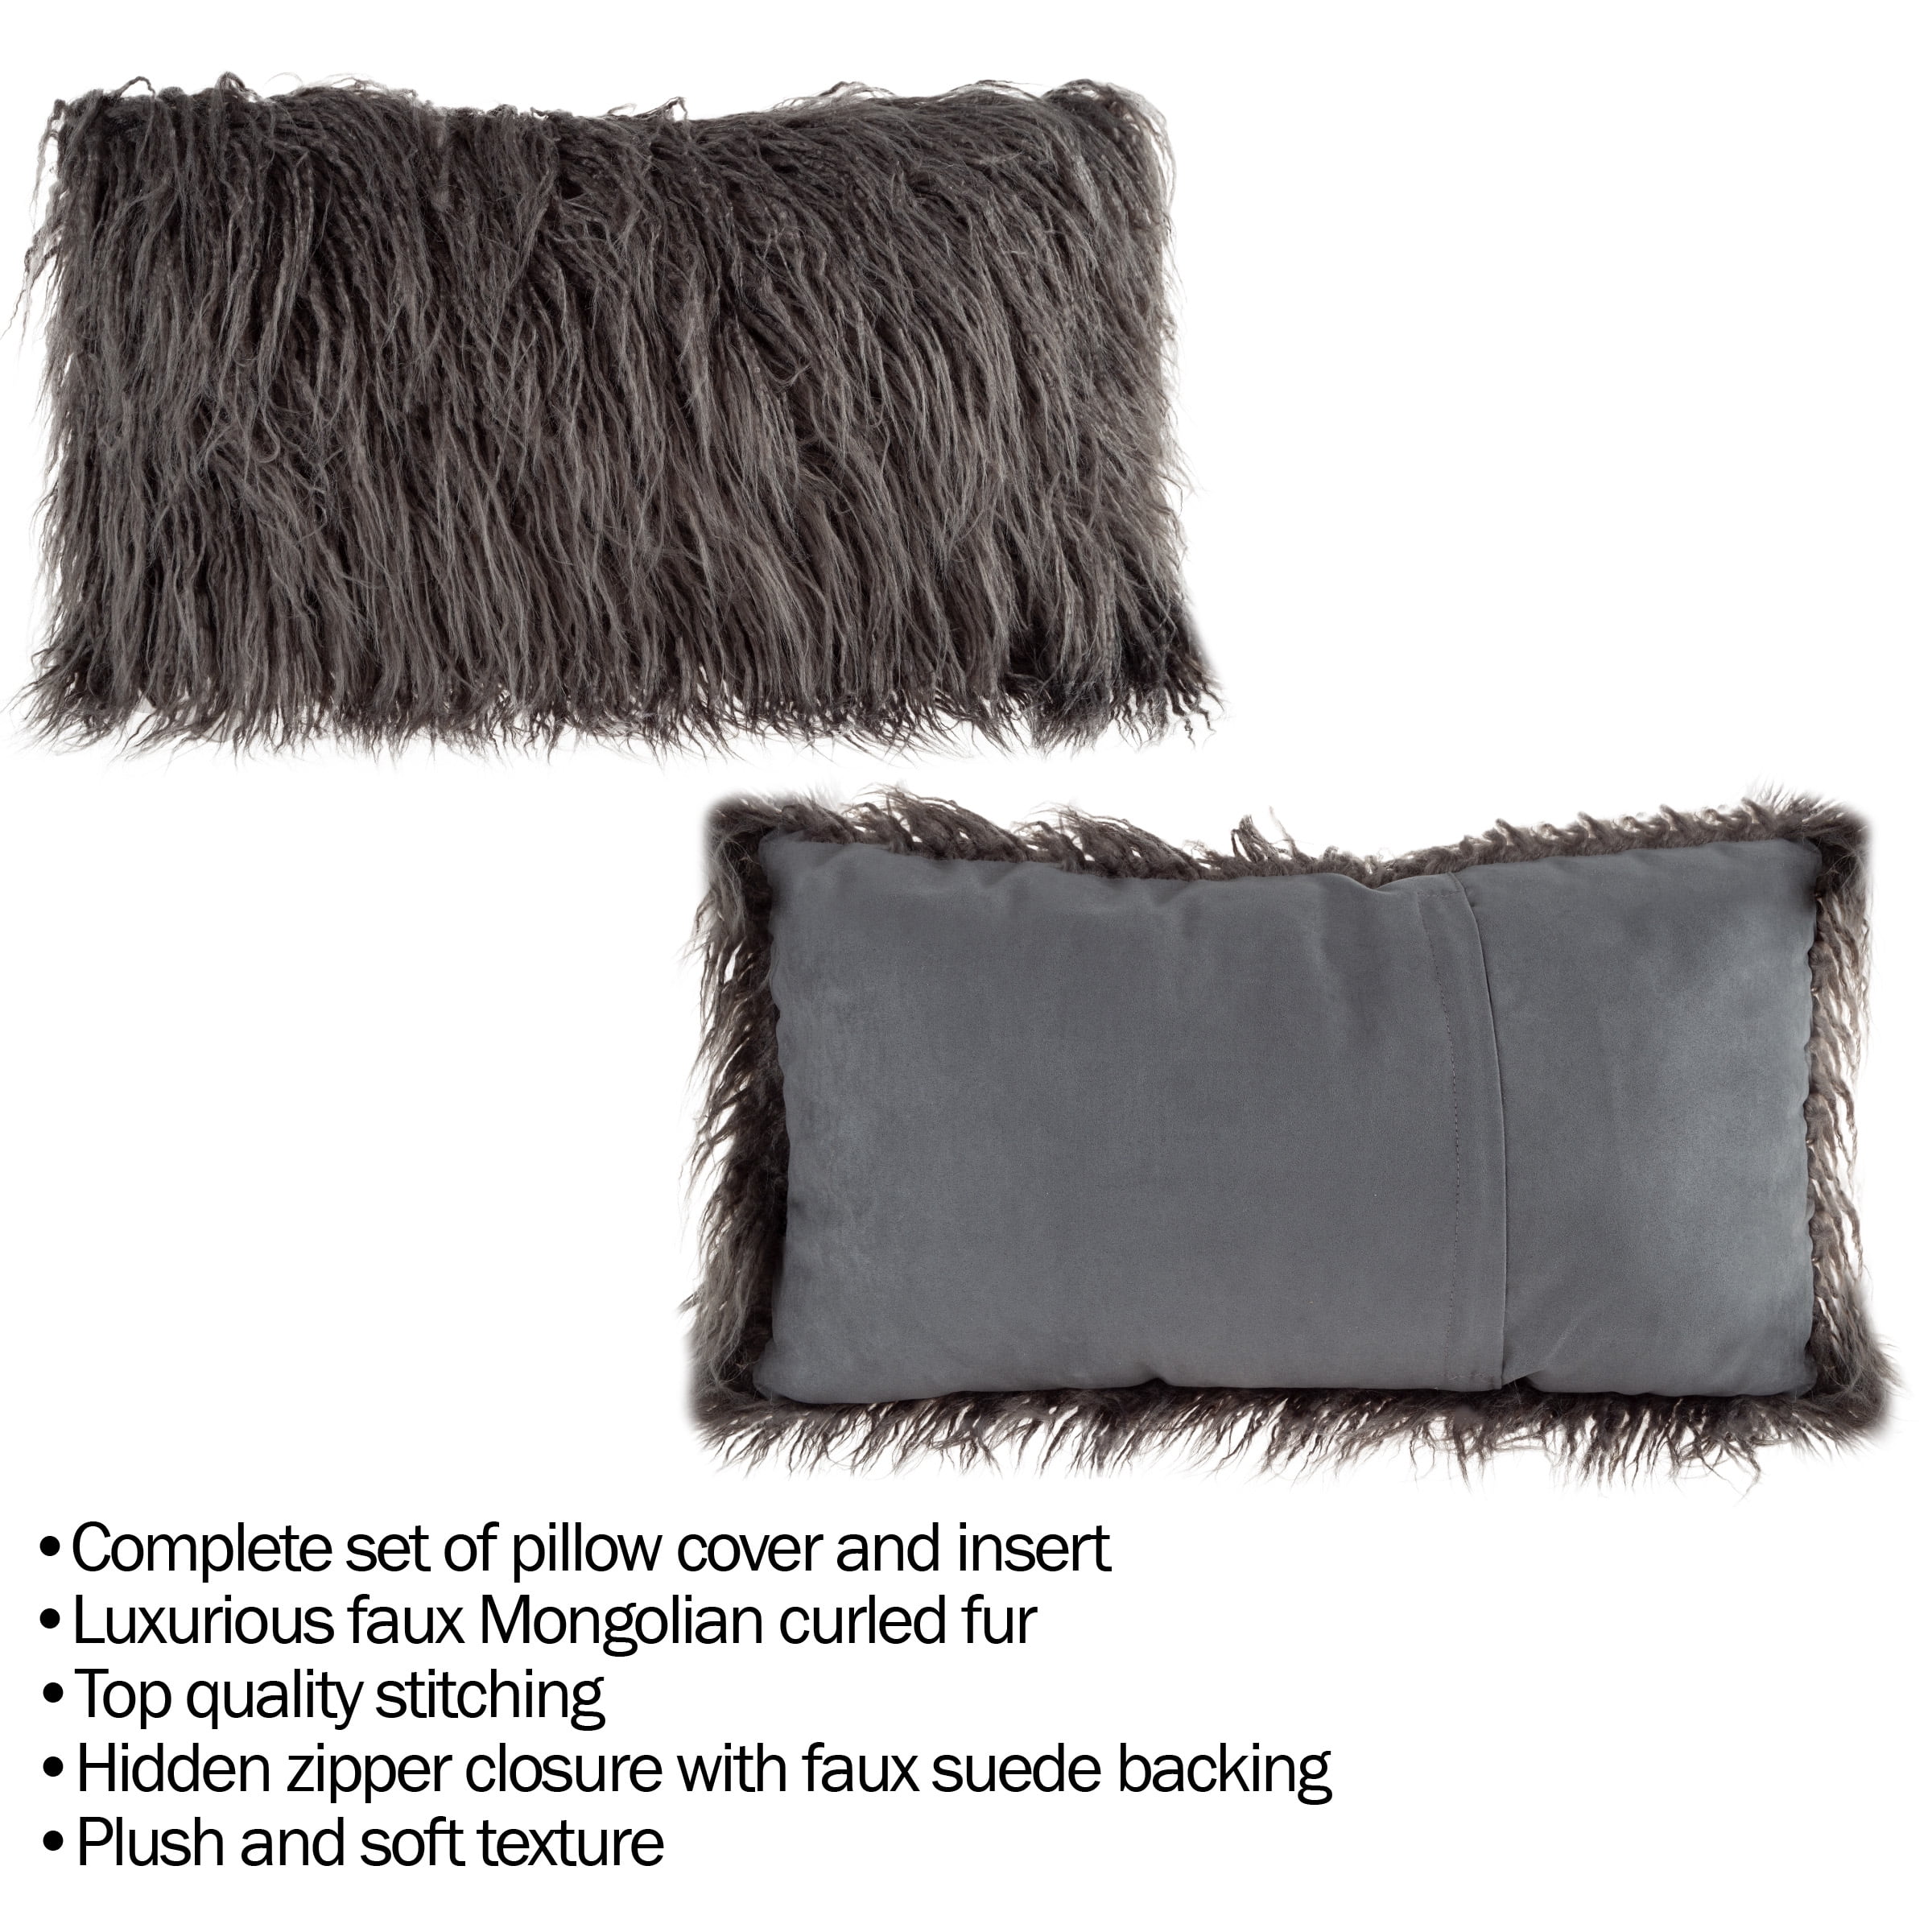 Fable Soft Gray Vegan Washable Faux Fur lumbar decorative Pillow